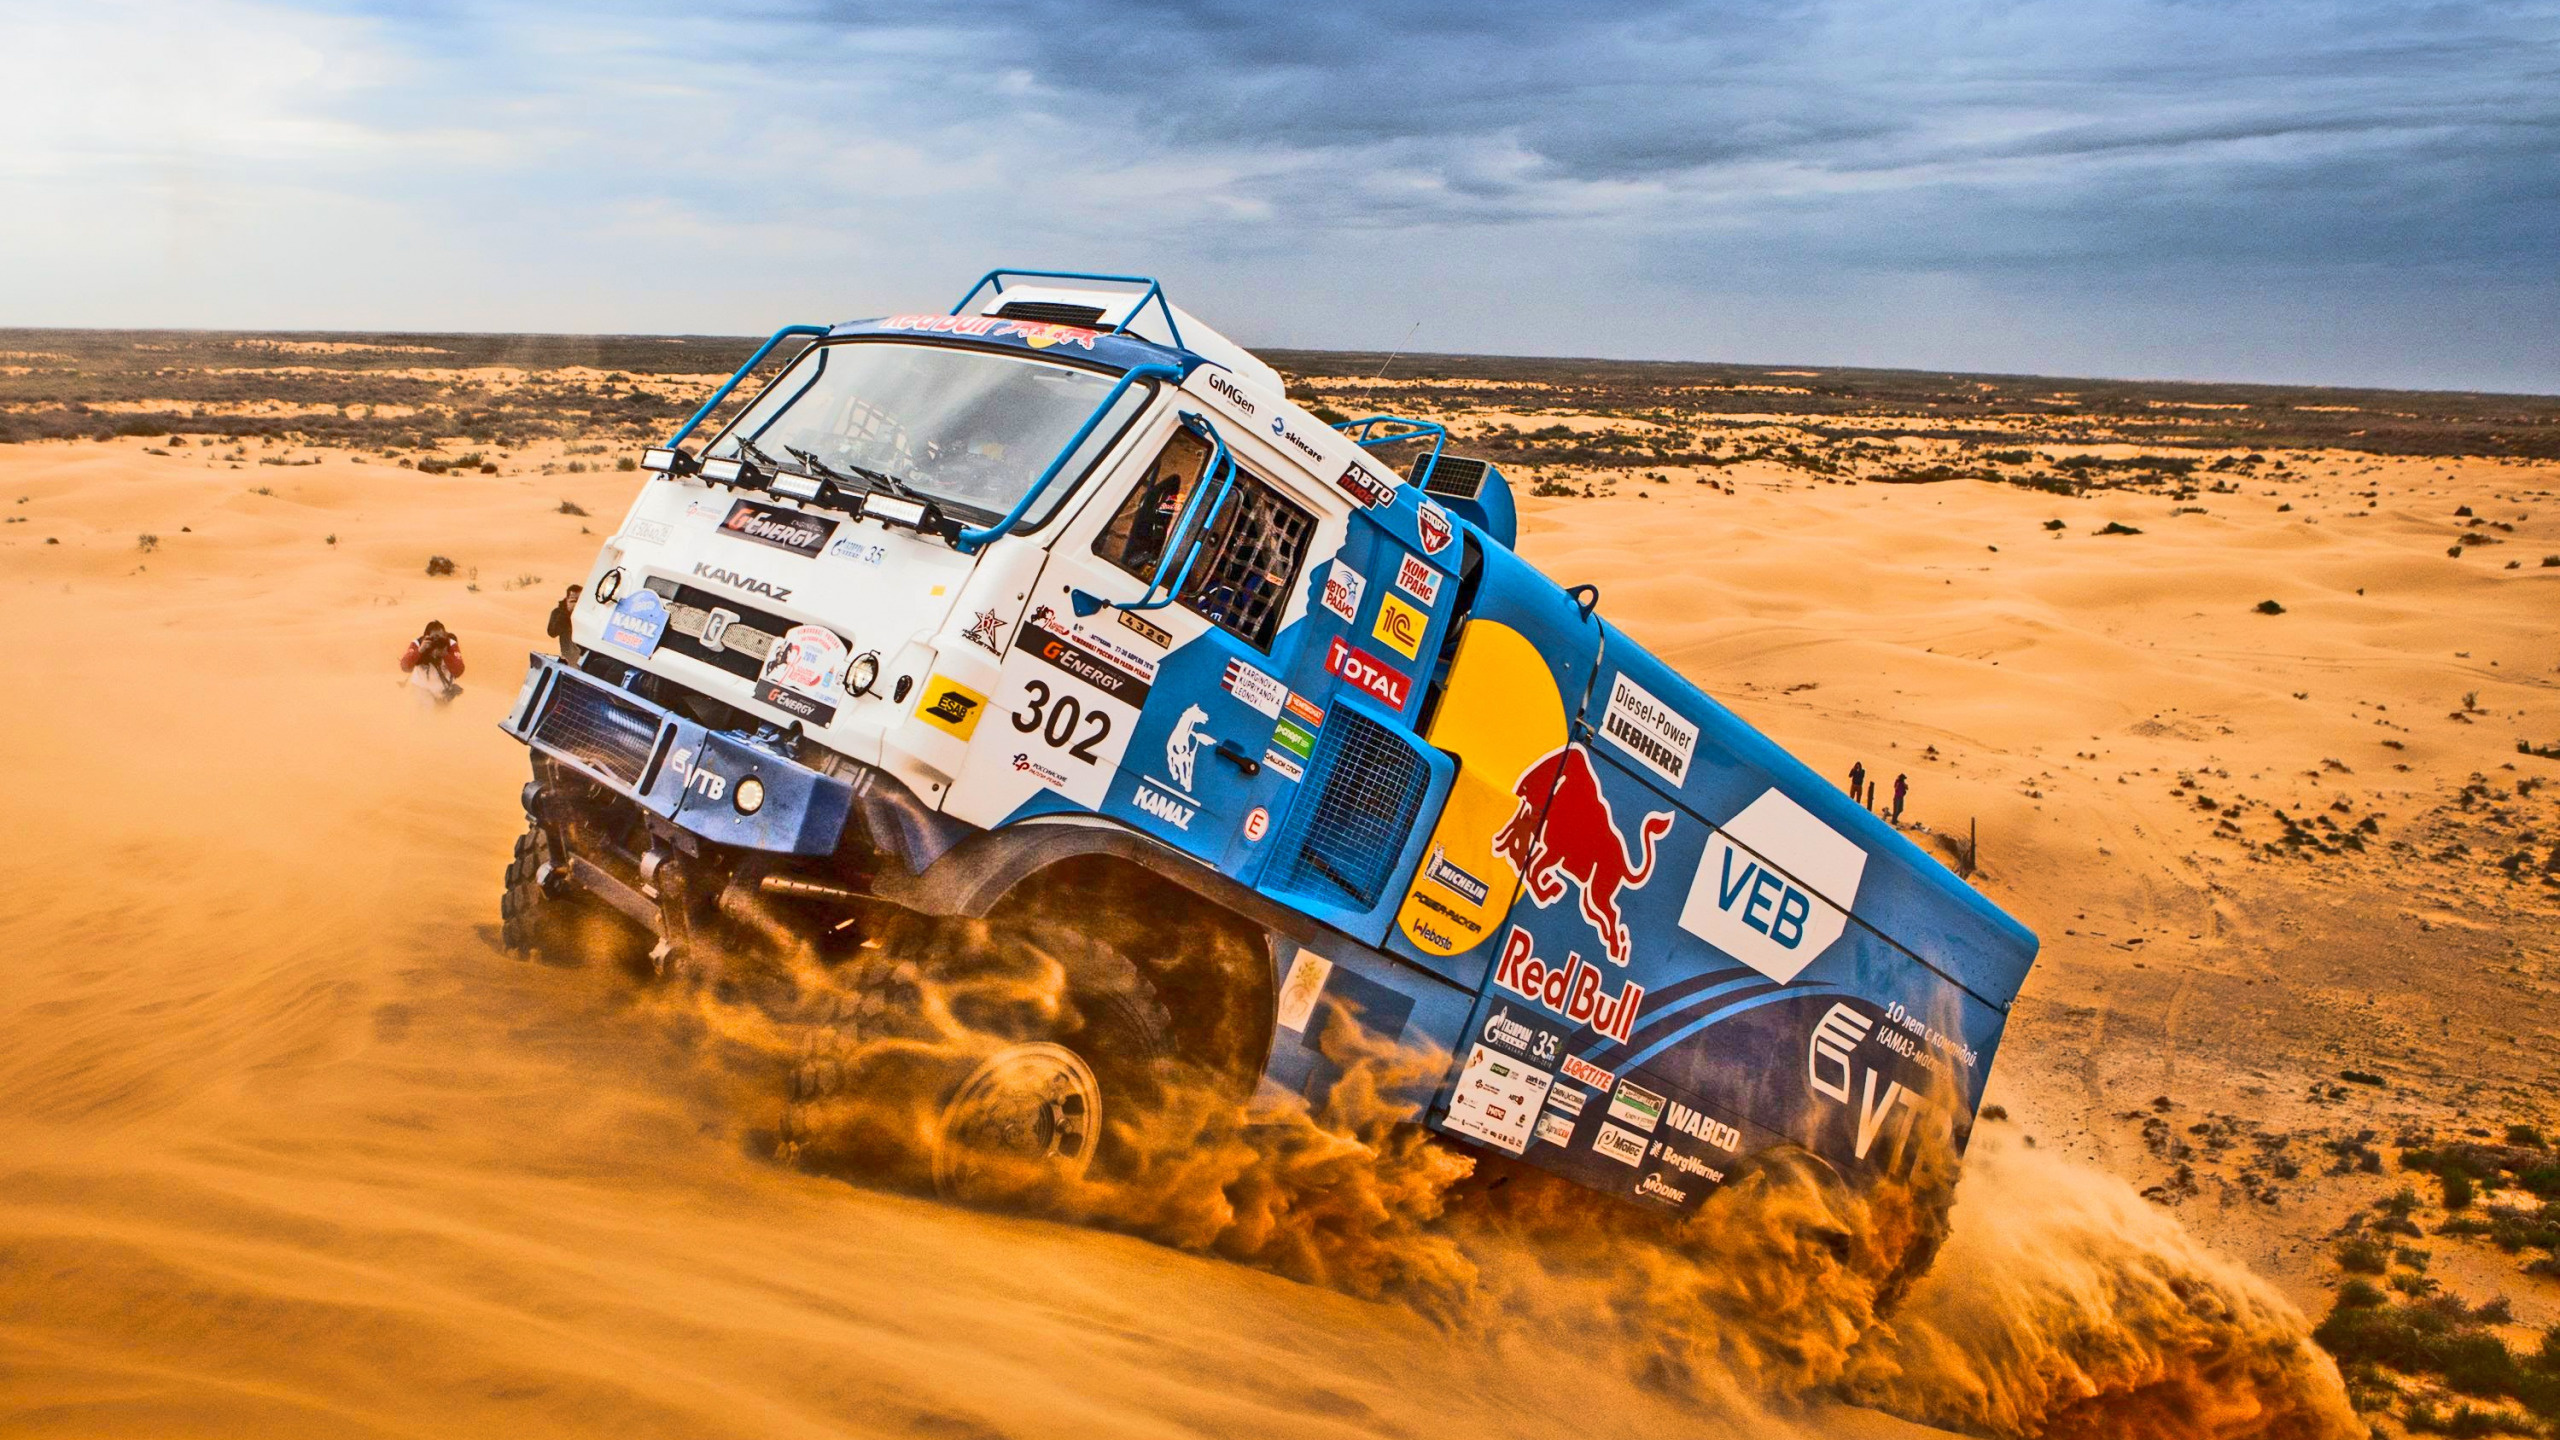 Dakar Rally: Redbull, Team Kamaz Master, VTB, The general sponsor, Rally. 2560x1440 HD Wallpaper.